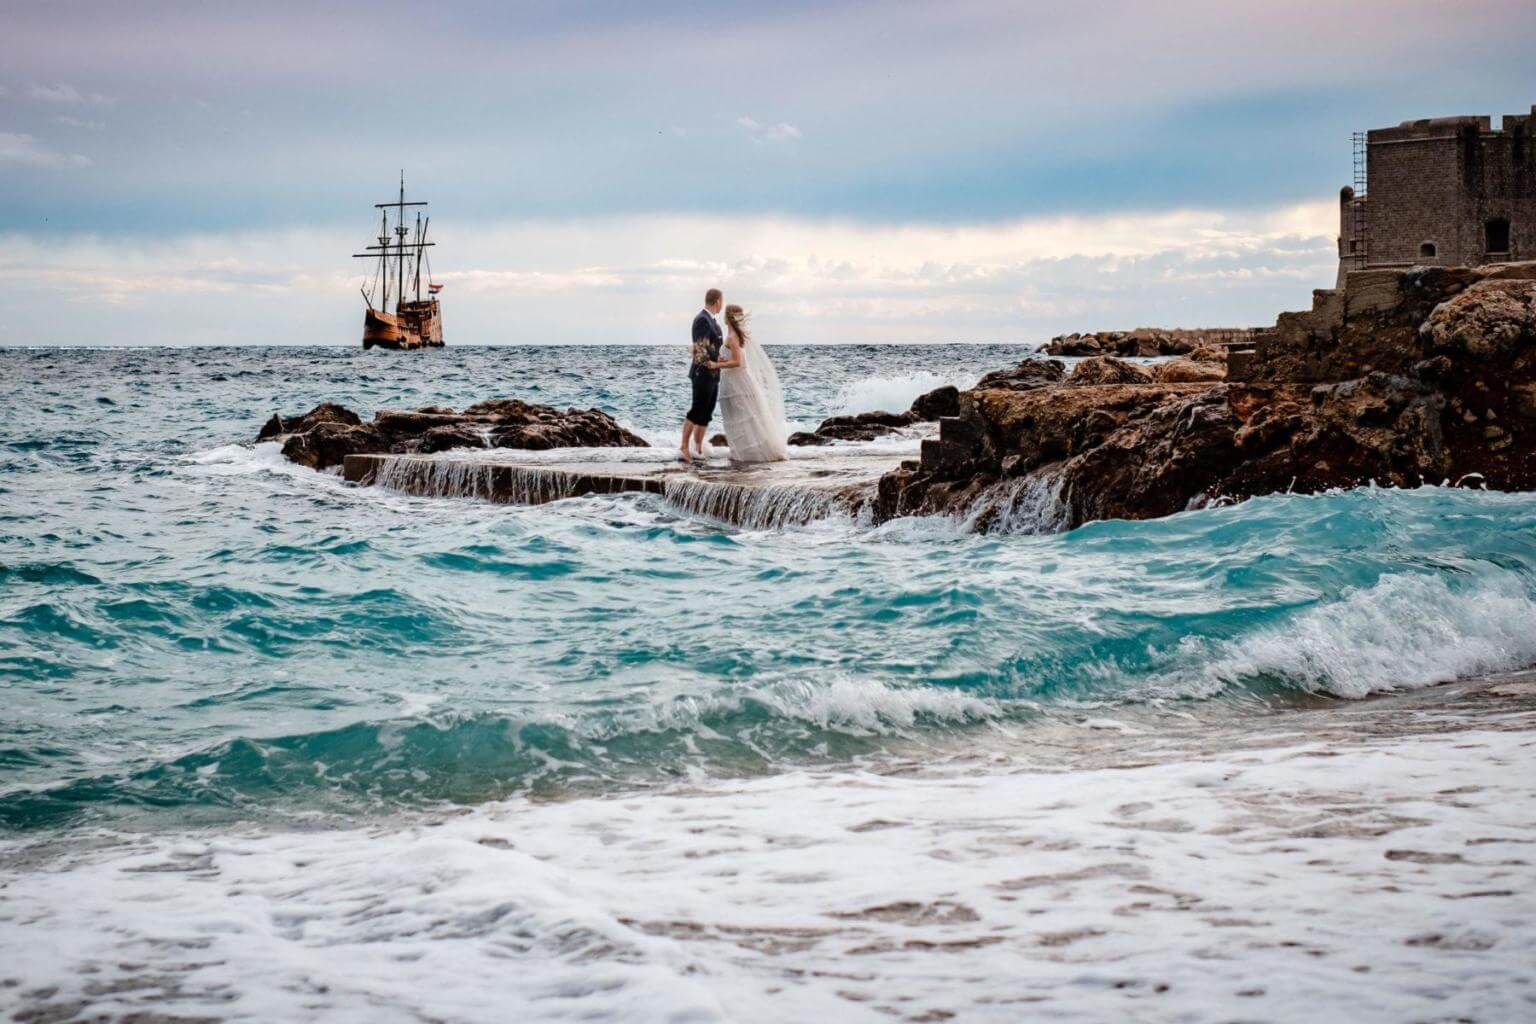 Brautpaar am Meer bei Hochzeit in Kroatien